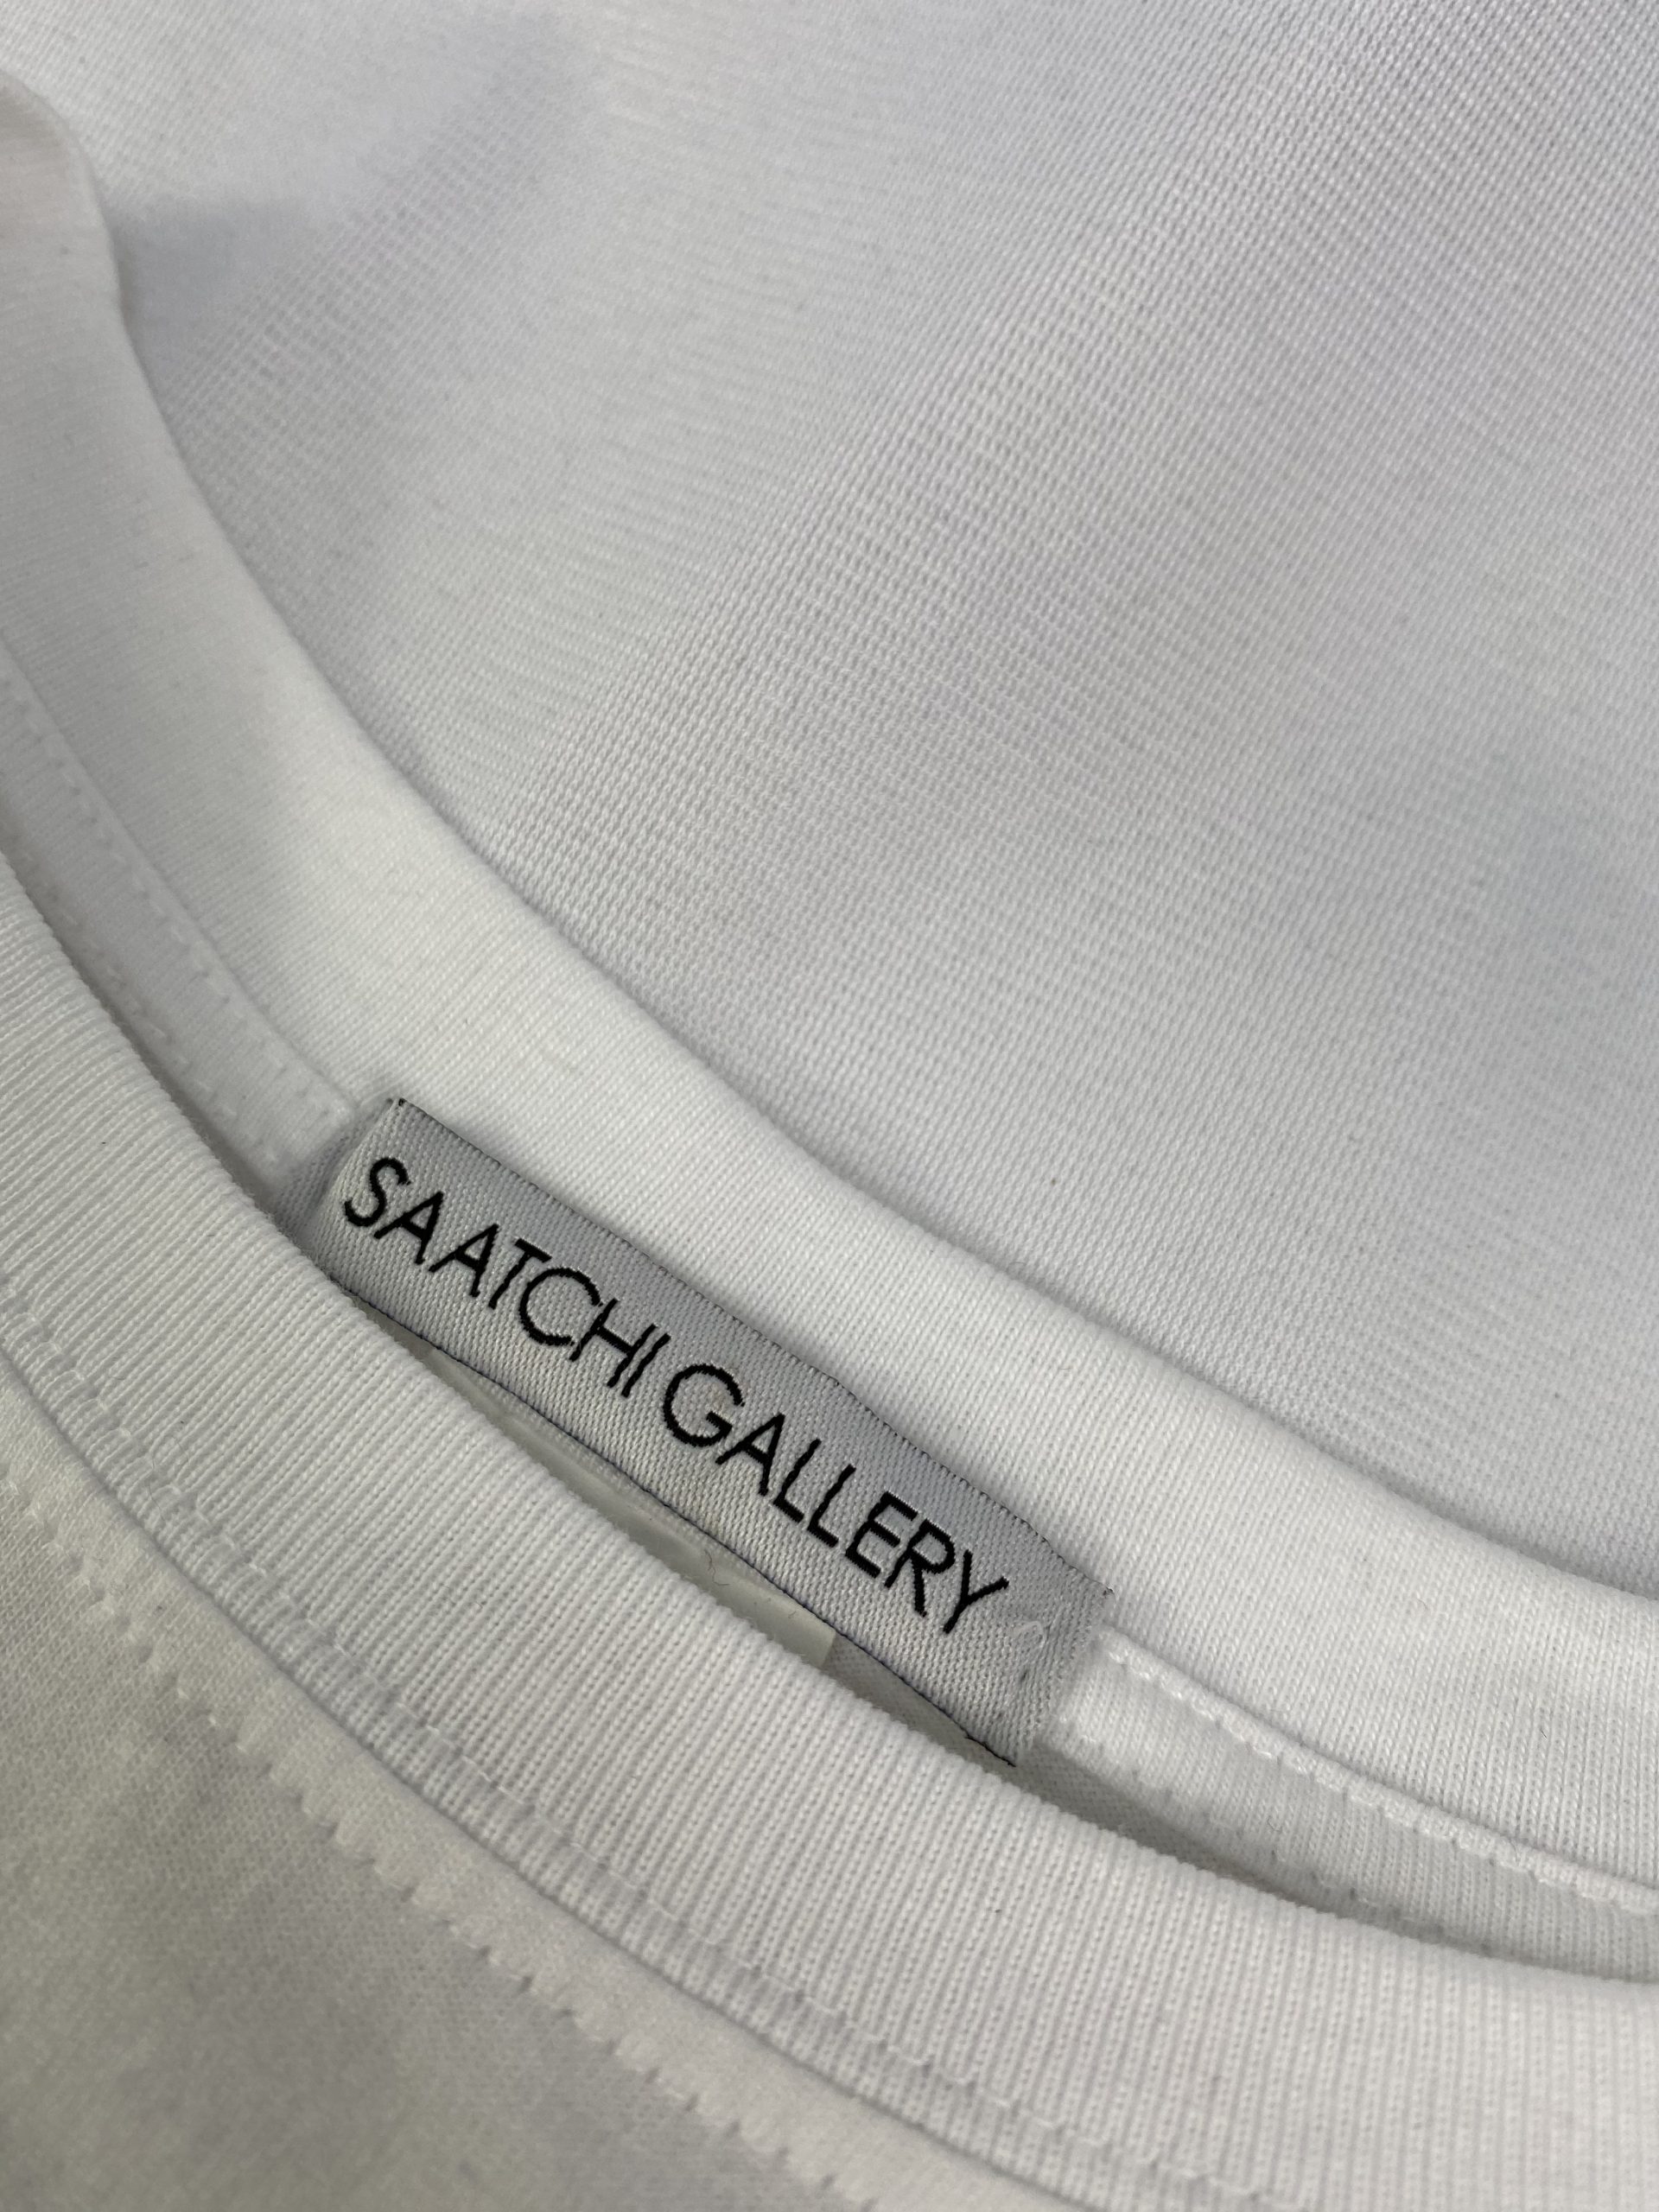 Saatchi Gallery Pure Evil t-shirt print on demand